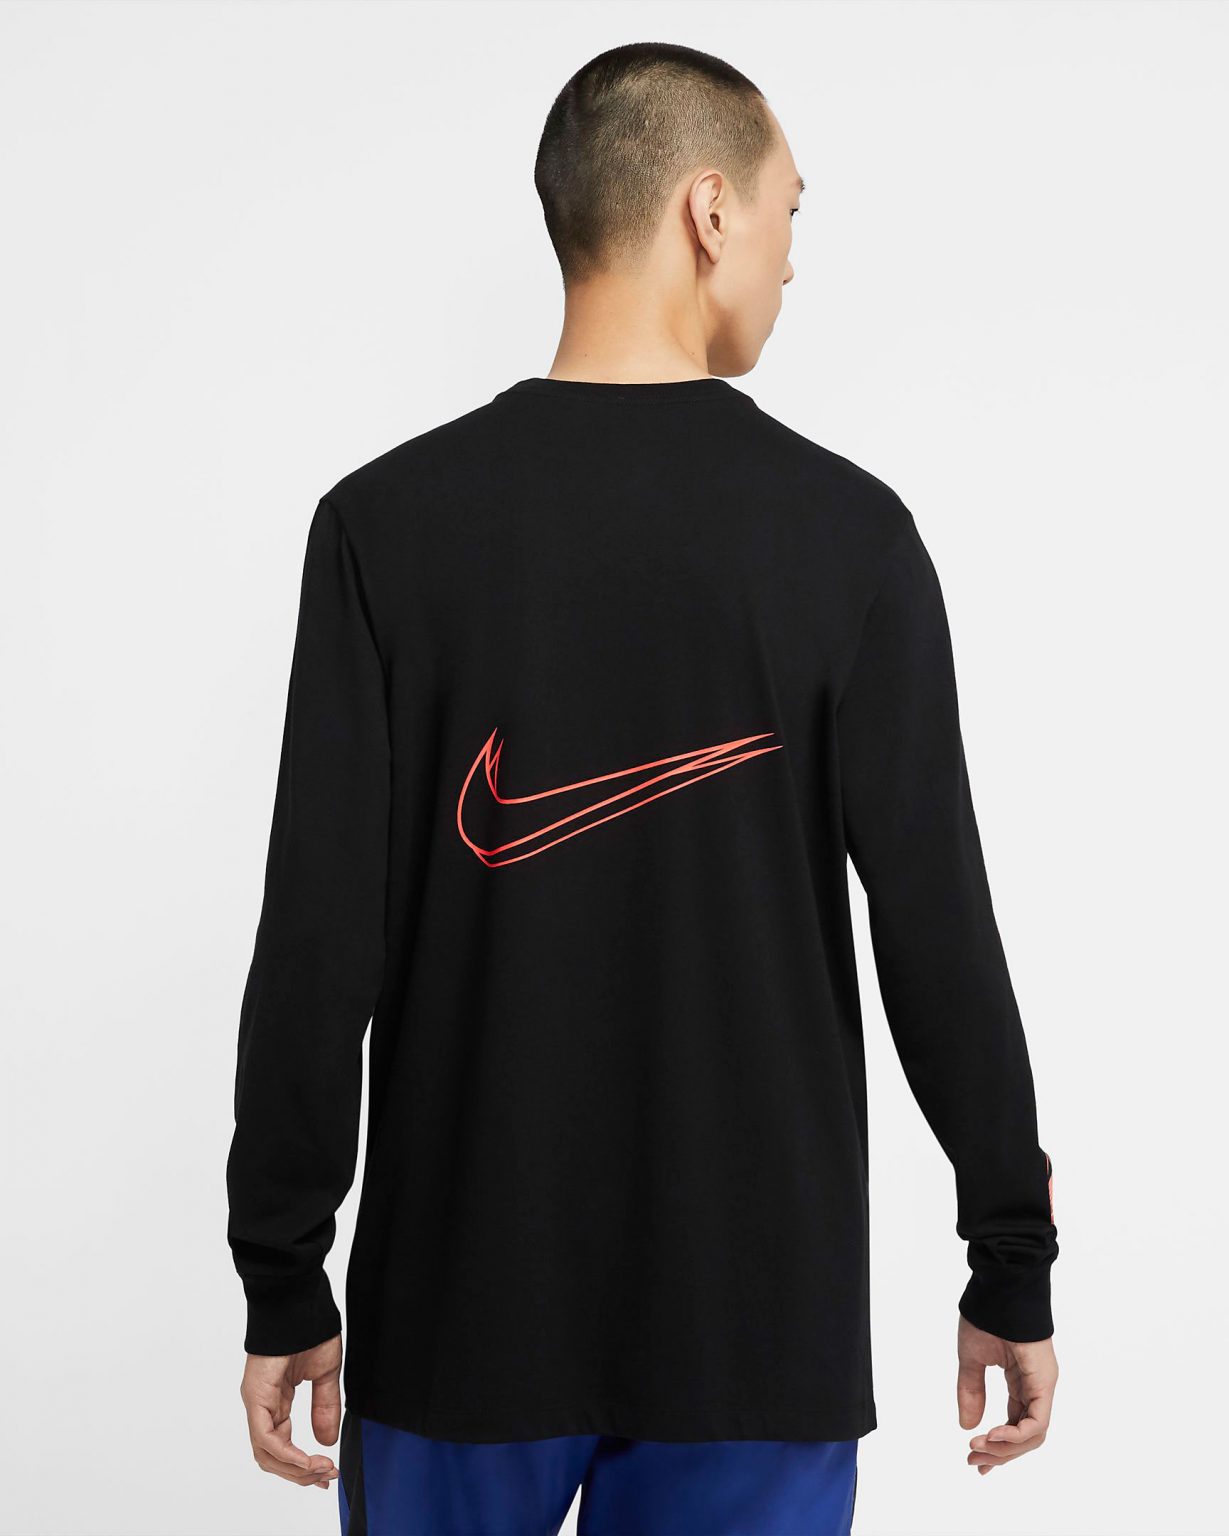 Nike Worldwide Shirts | SneakerFits.com